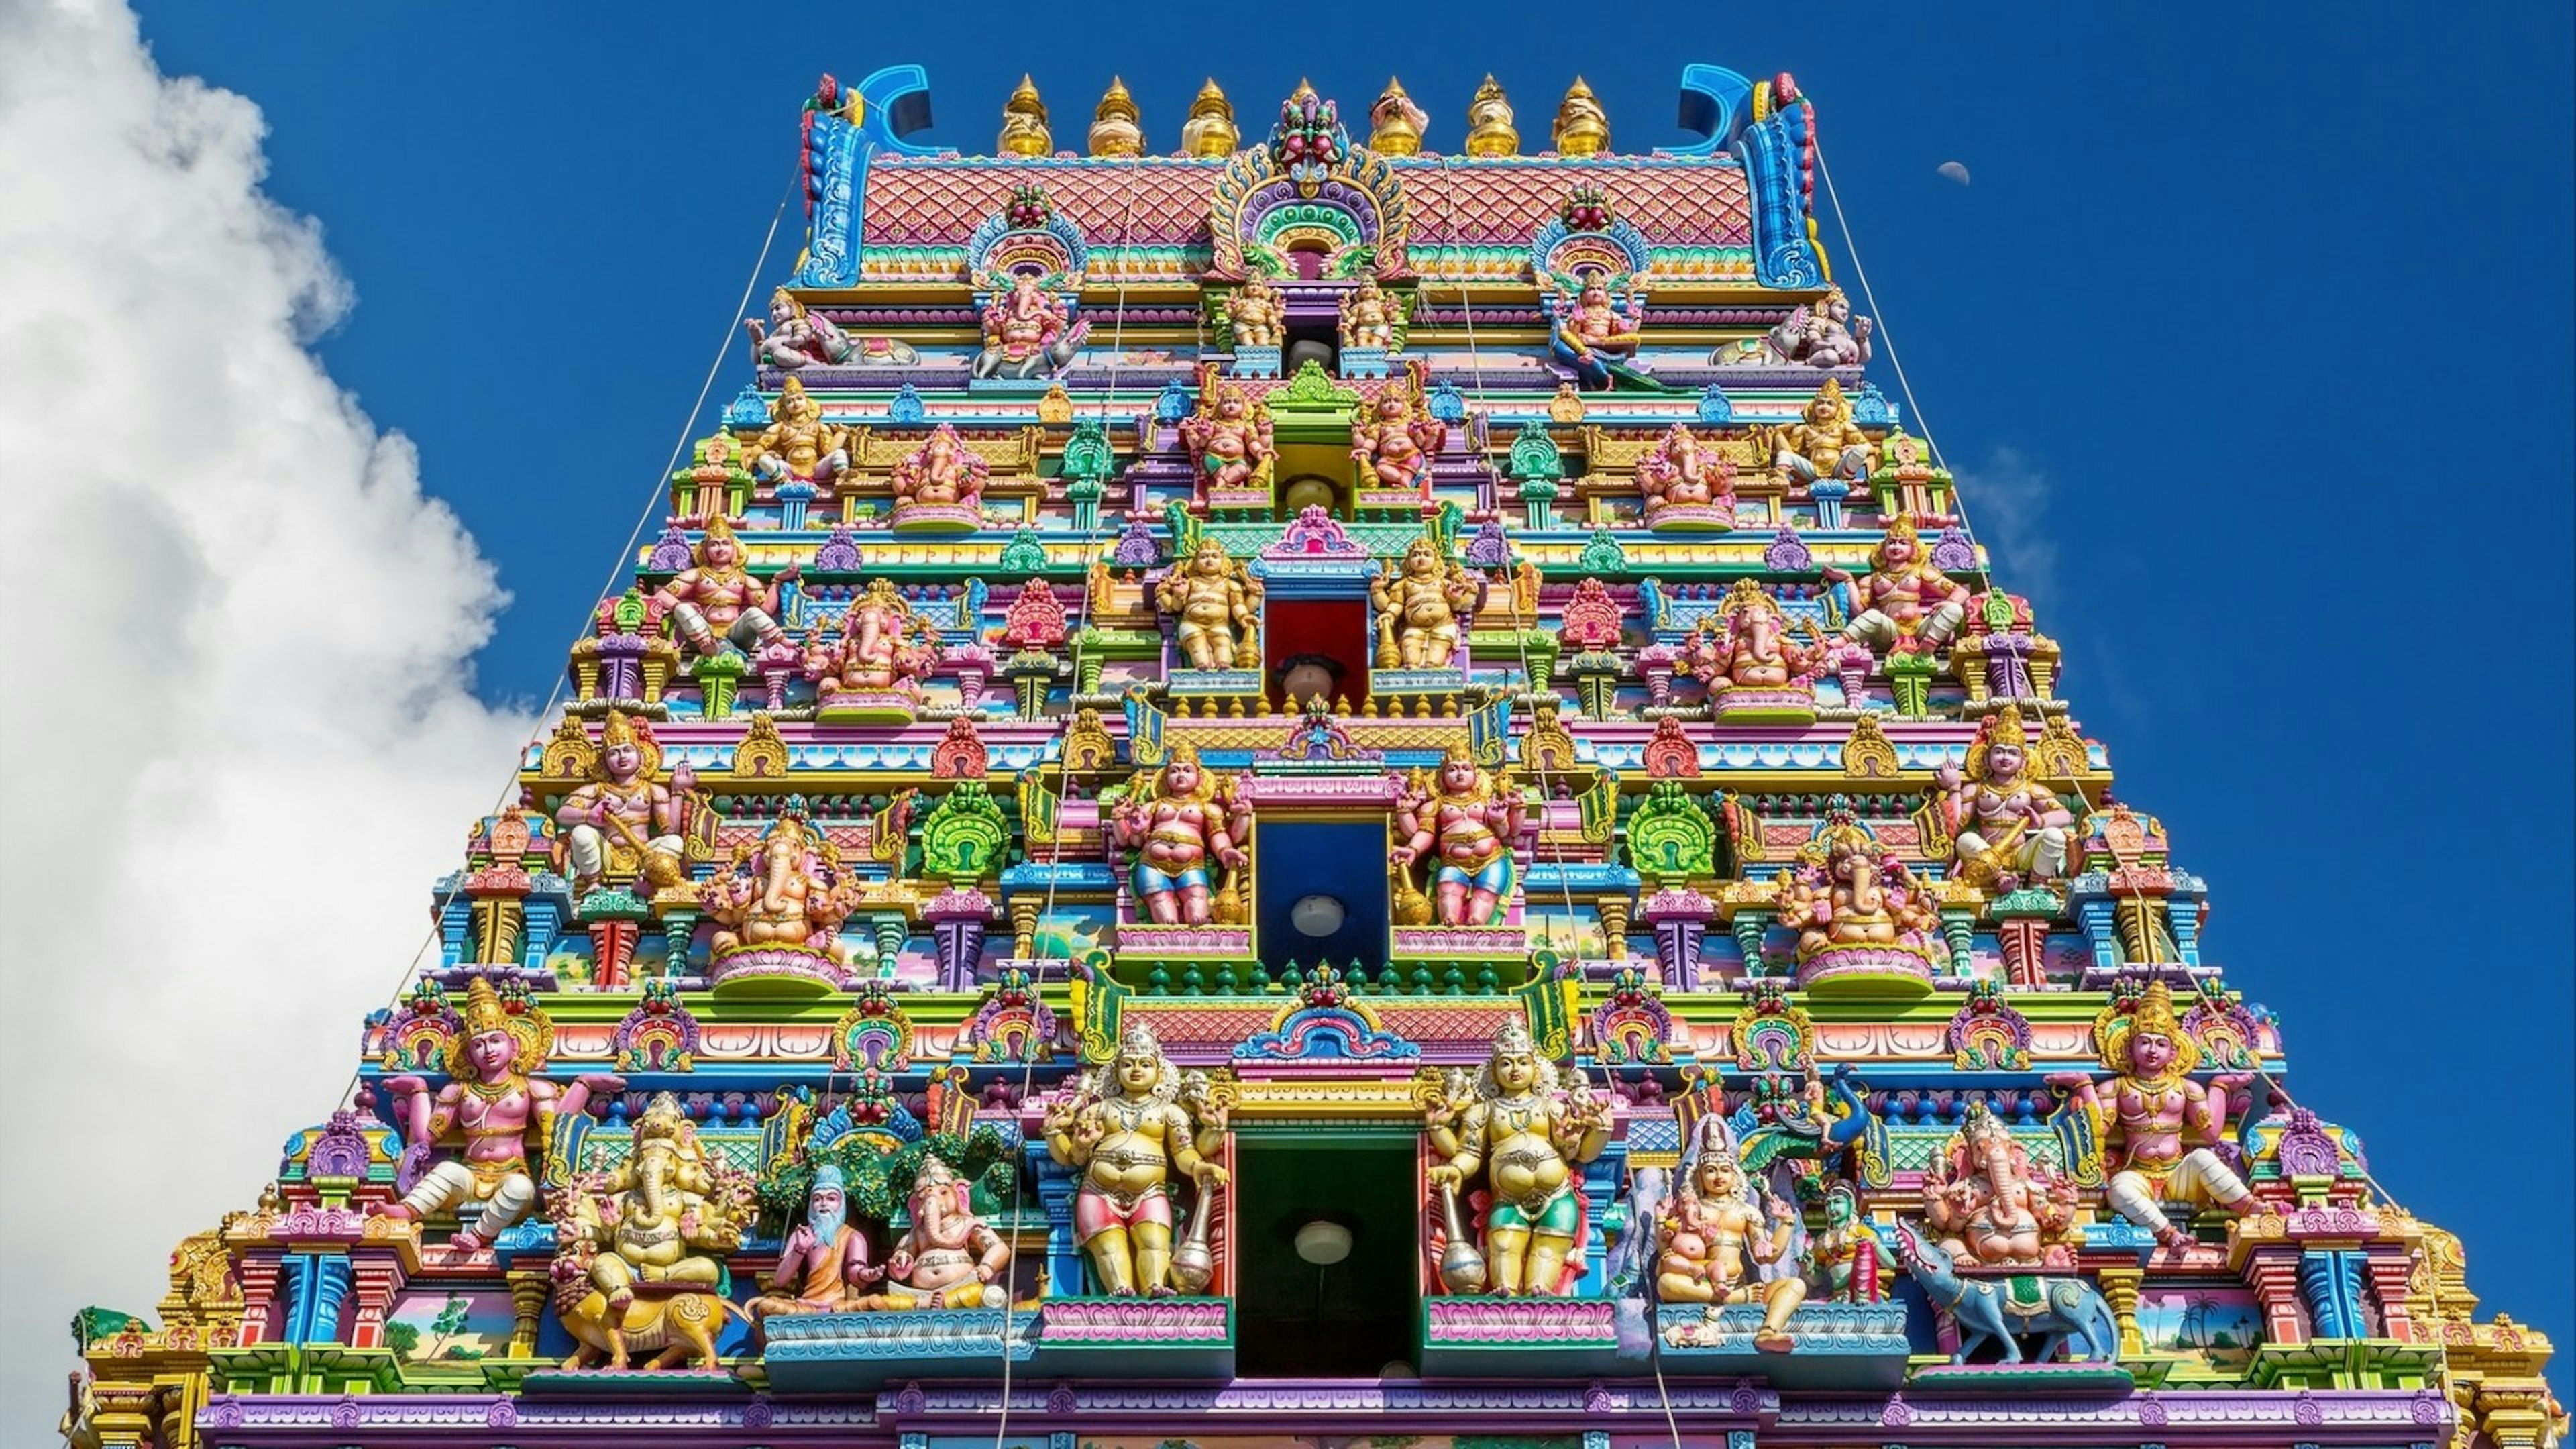 Colorful facade of a Hindu temple in Victoria, Mahe, Seychelles, also known as ARUL MIHU NAVASAKTHI VINAYAGAR